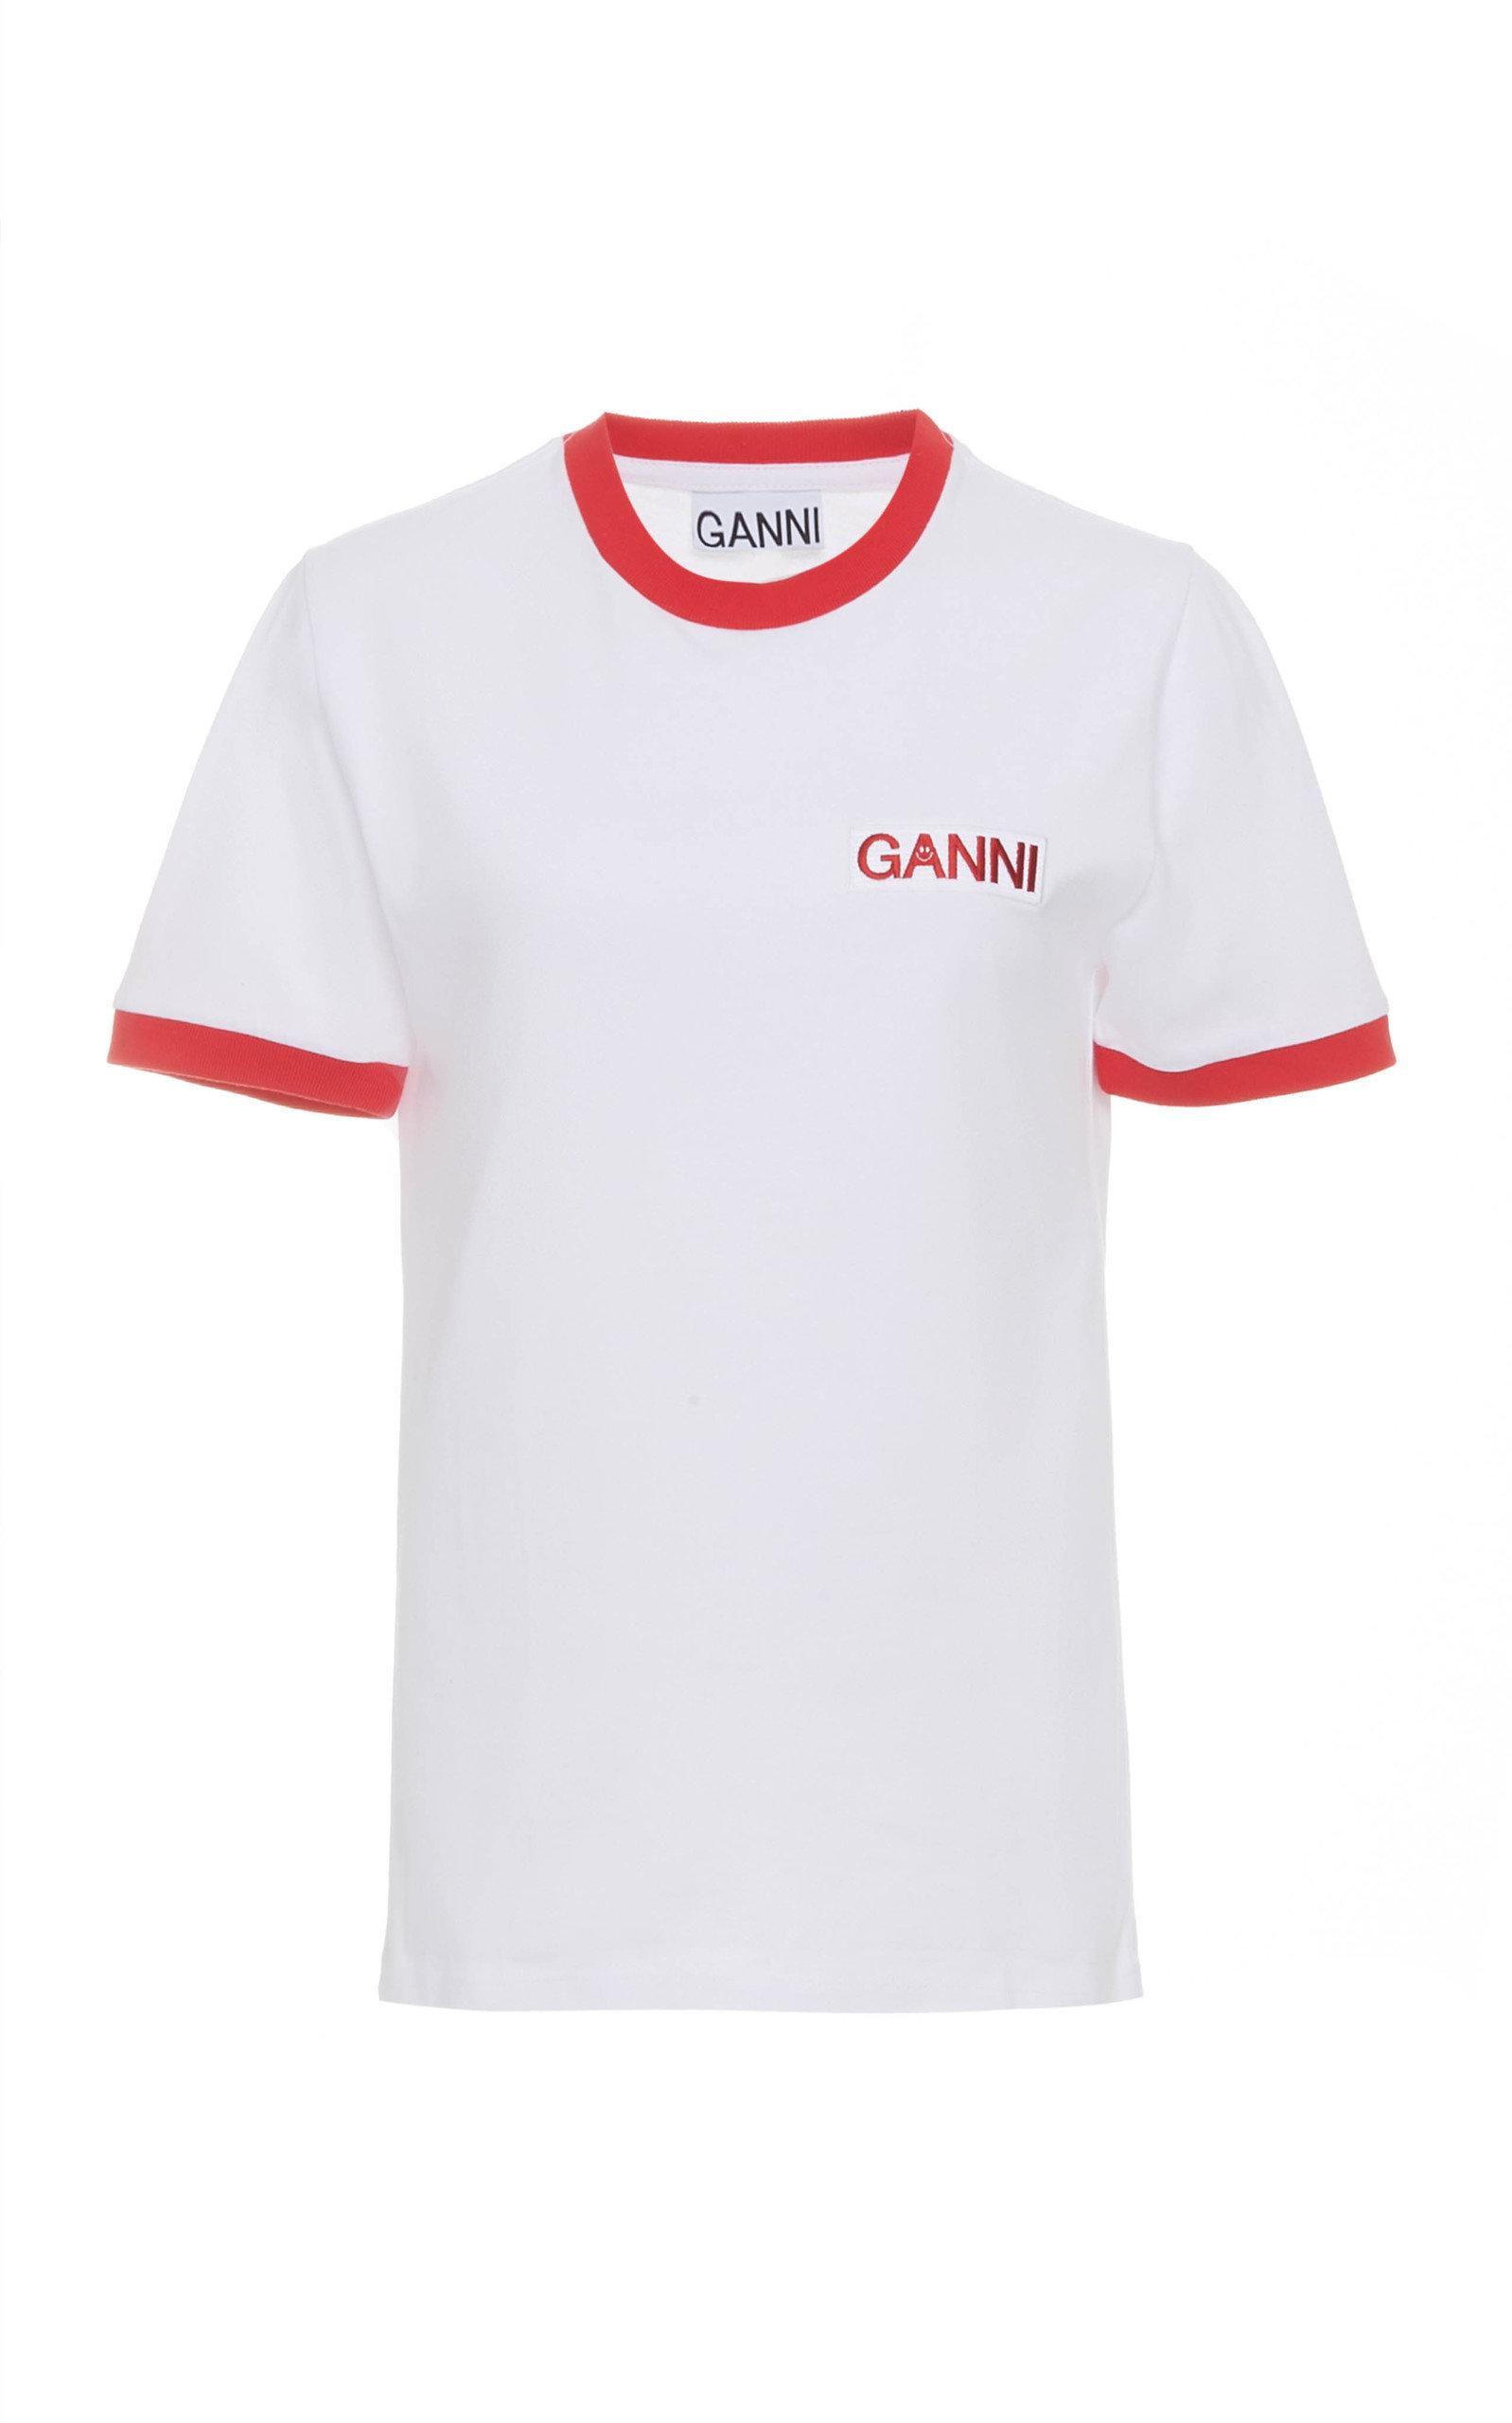 Ganni Basic Cotton Jersey T-shirt in White - Lyst